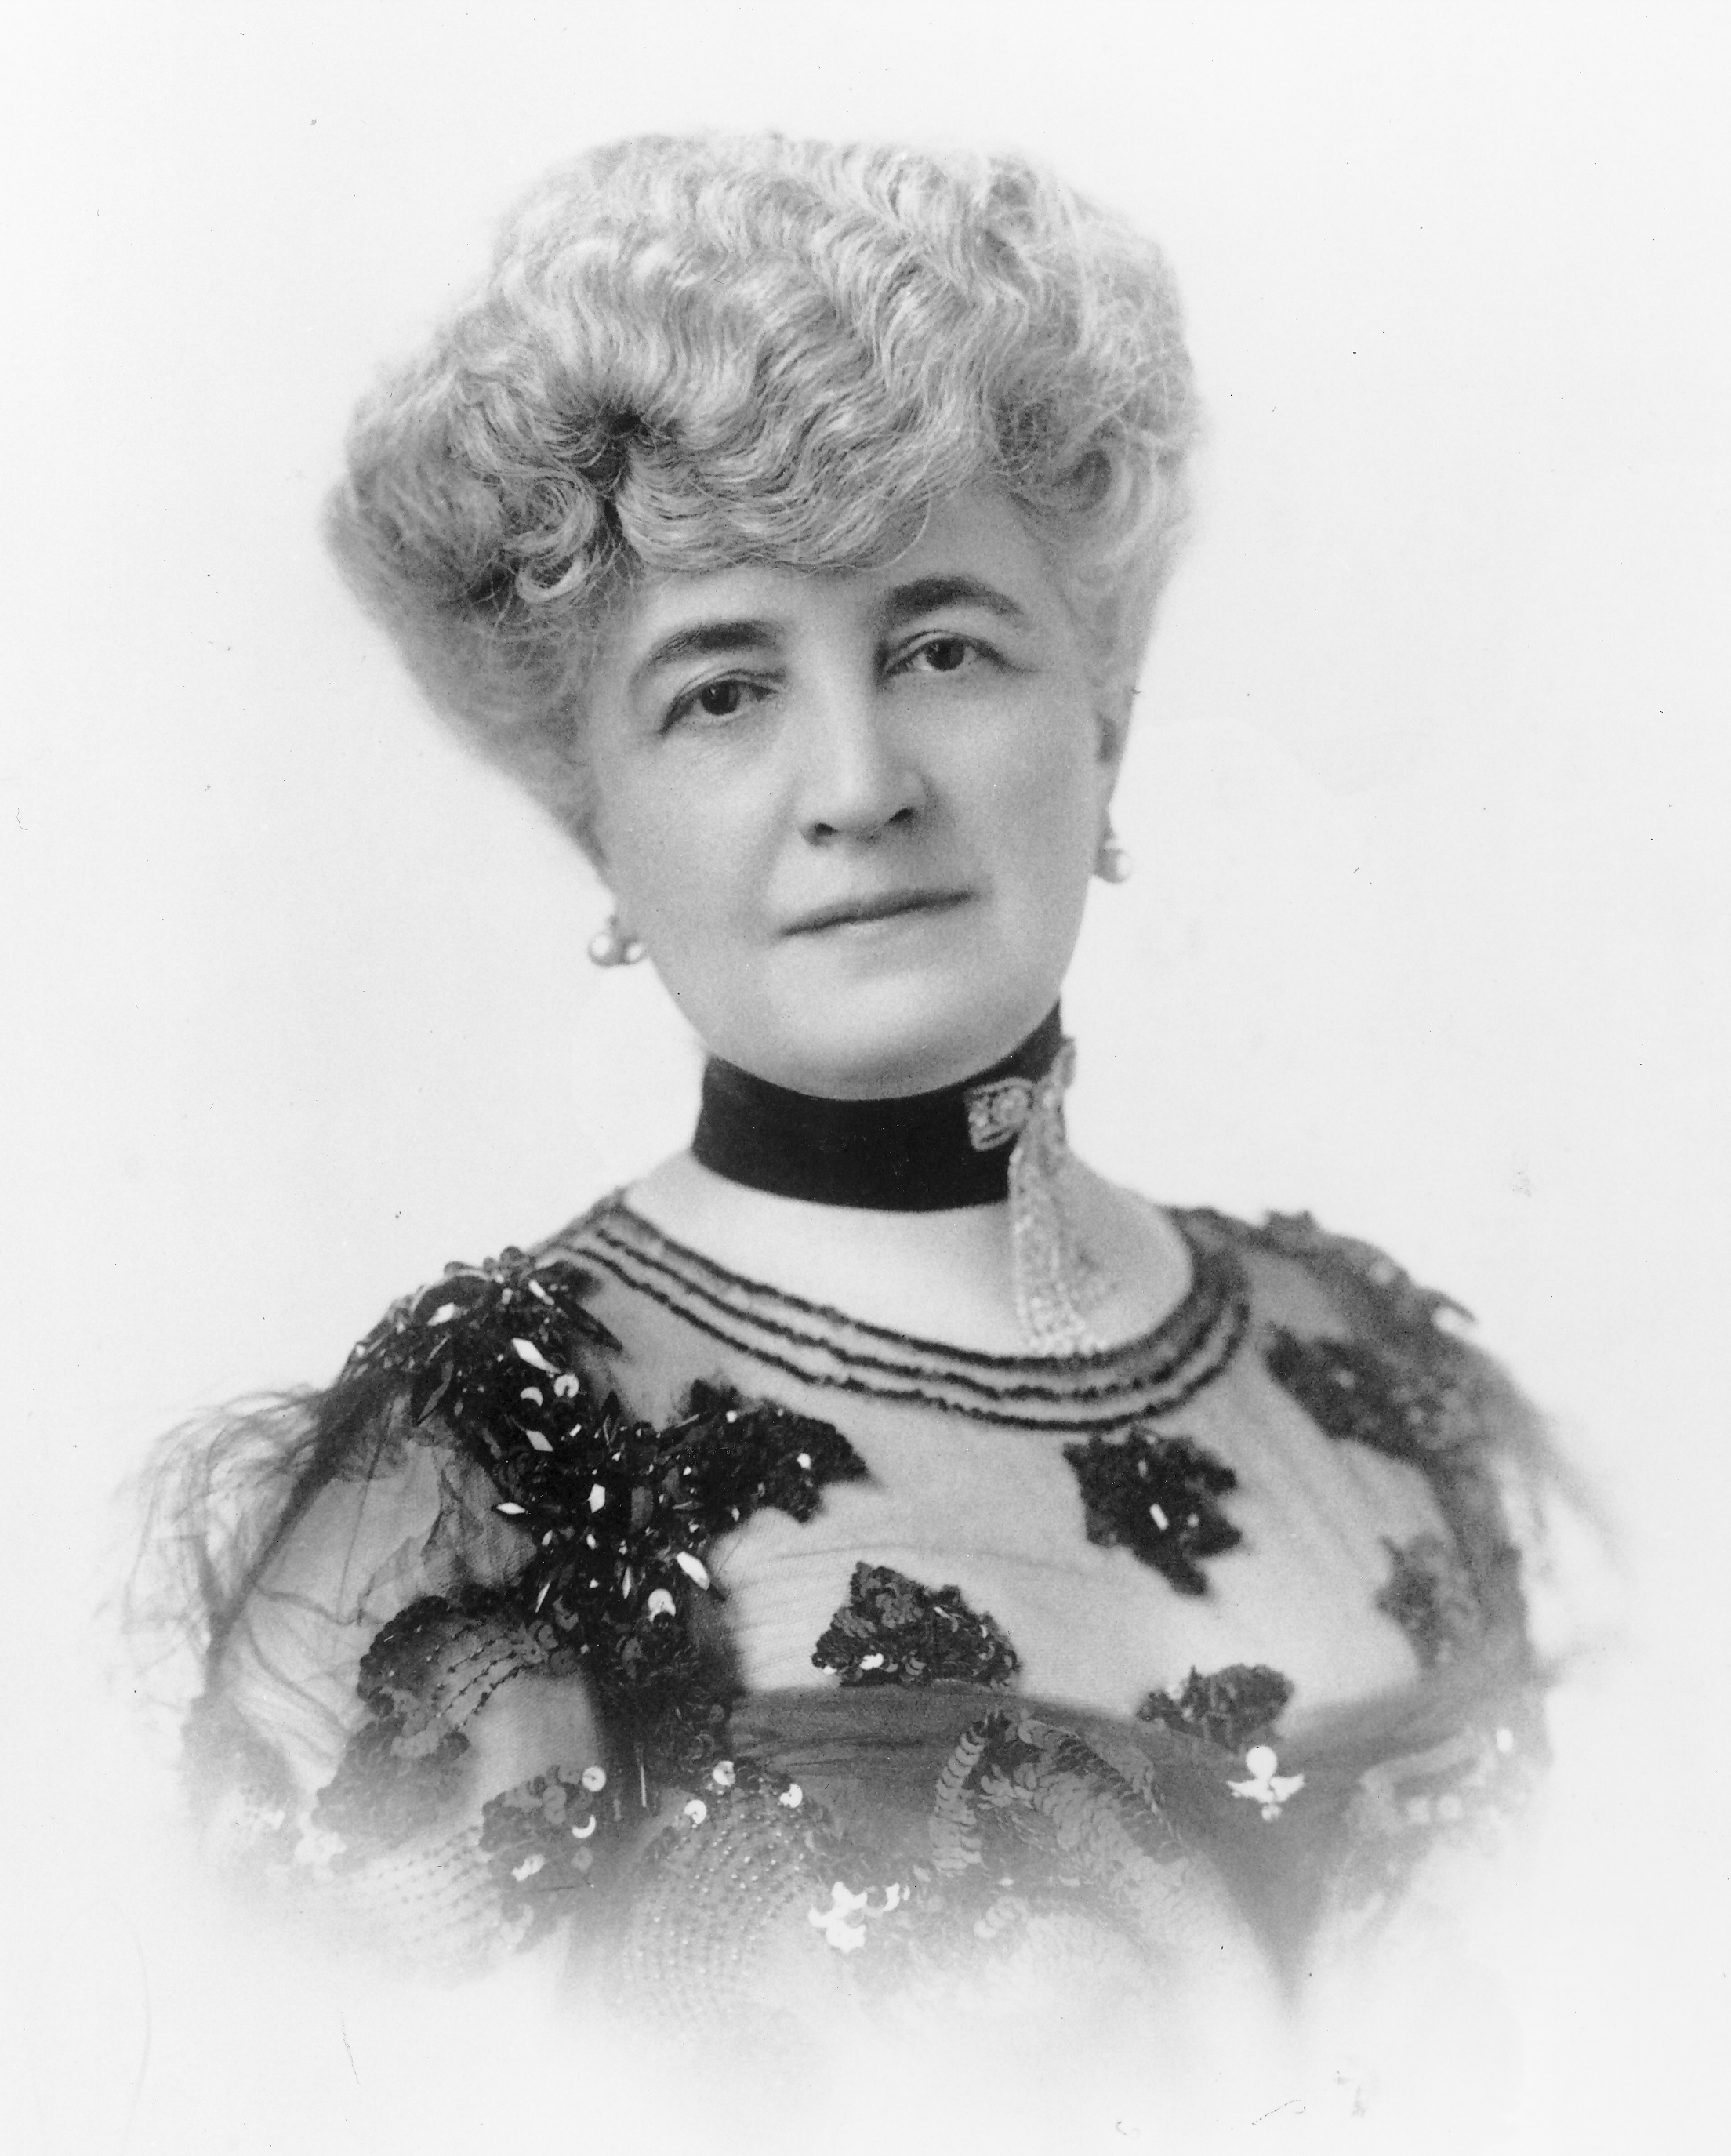 Bertha Palmer